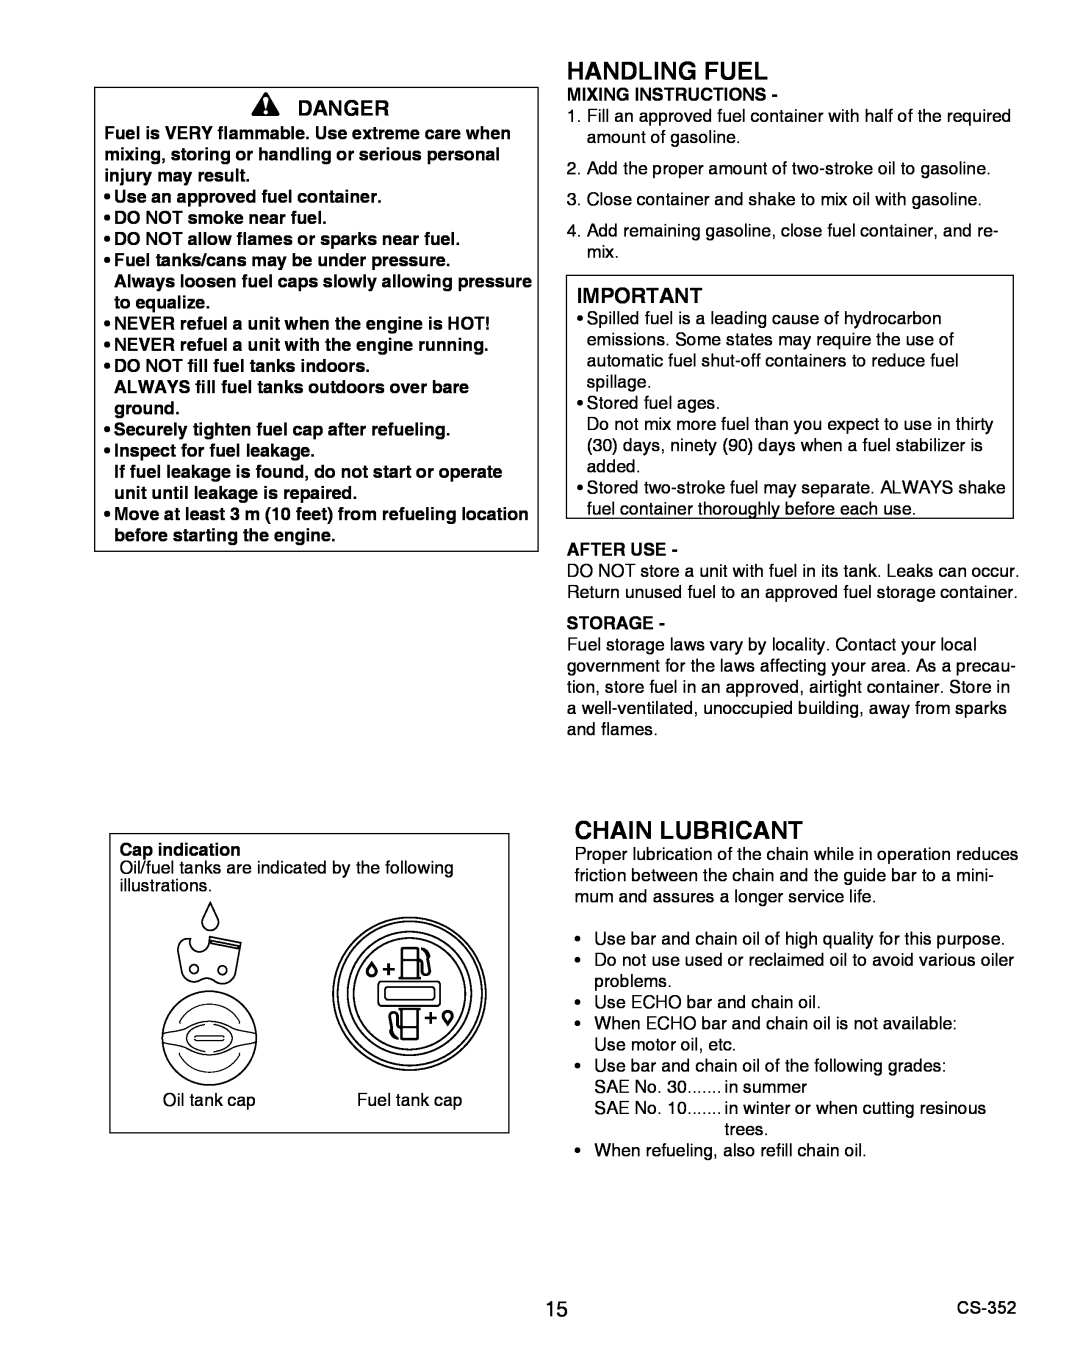 Echo X750020201 instruction manual Handling Fuel, Chain Lubricant, Danger 